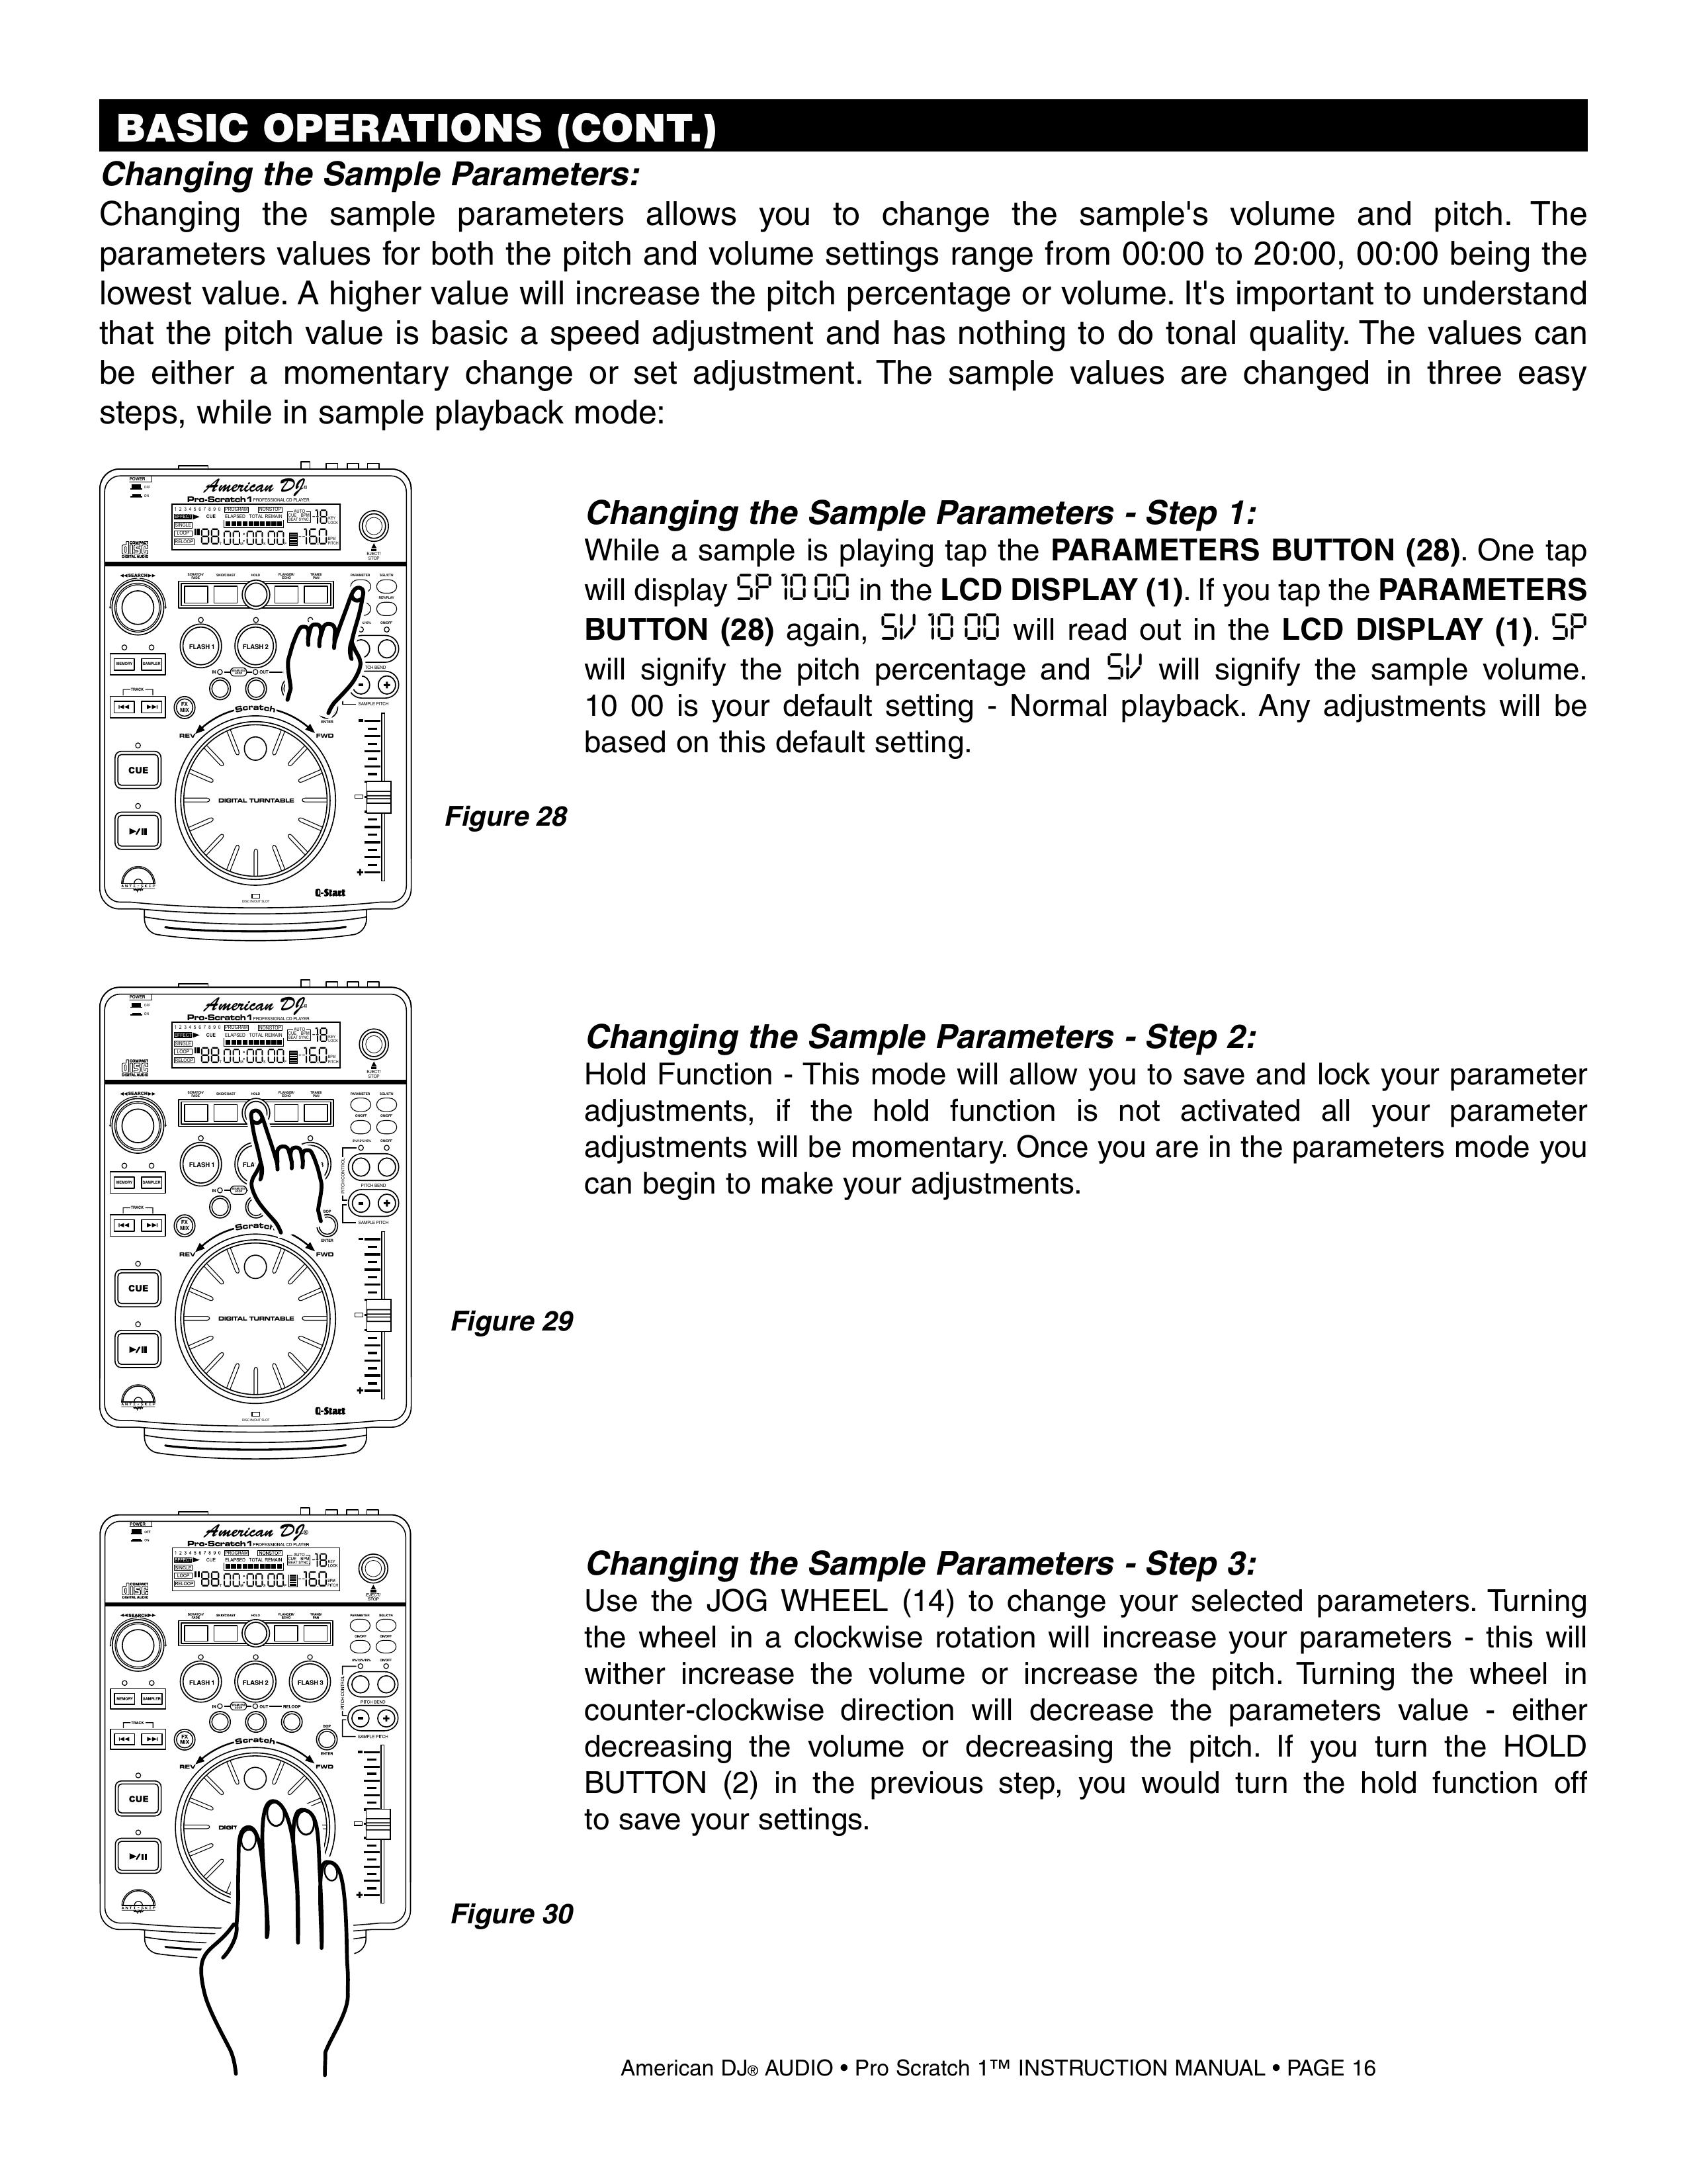 American Audio Pro Scratch 1 DJ Equipment User Manual (Page 16)